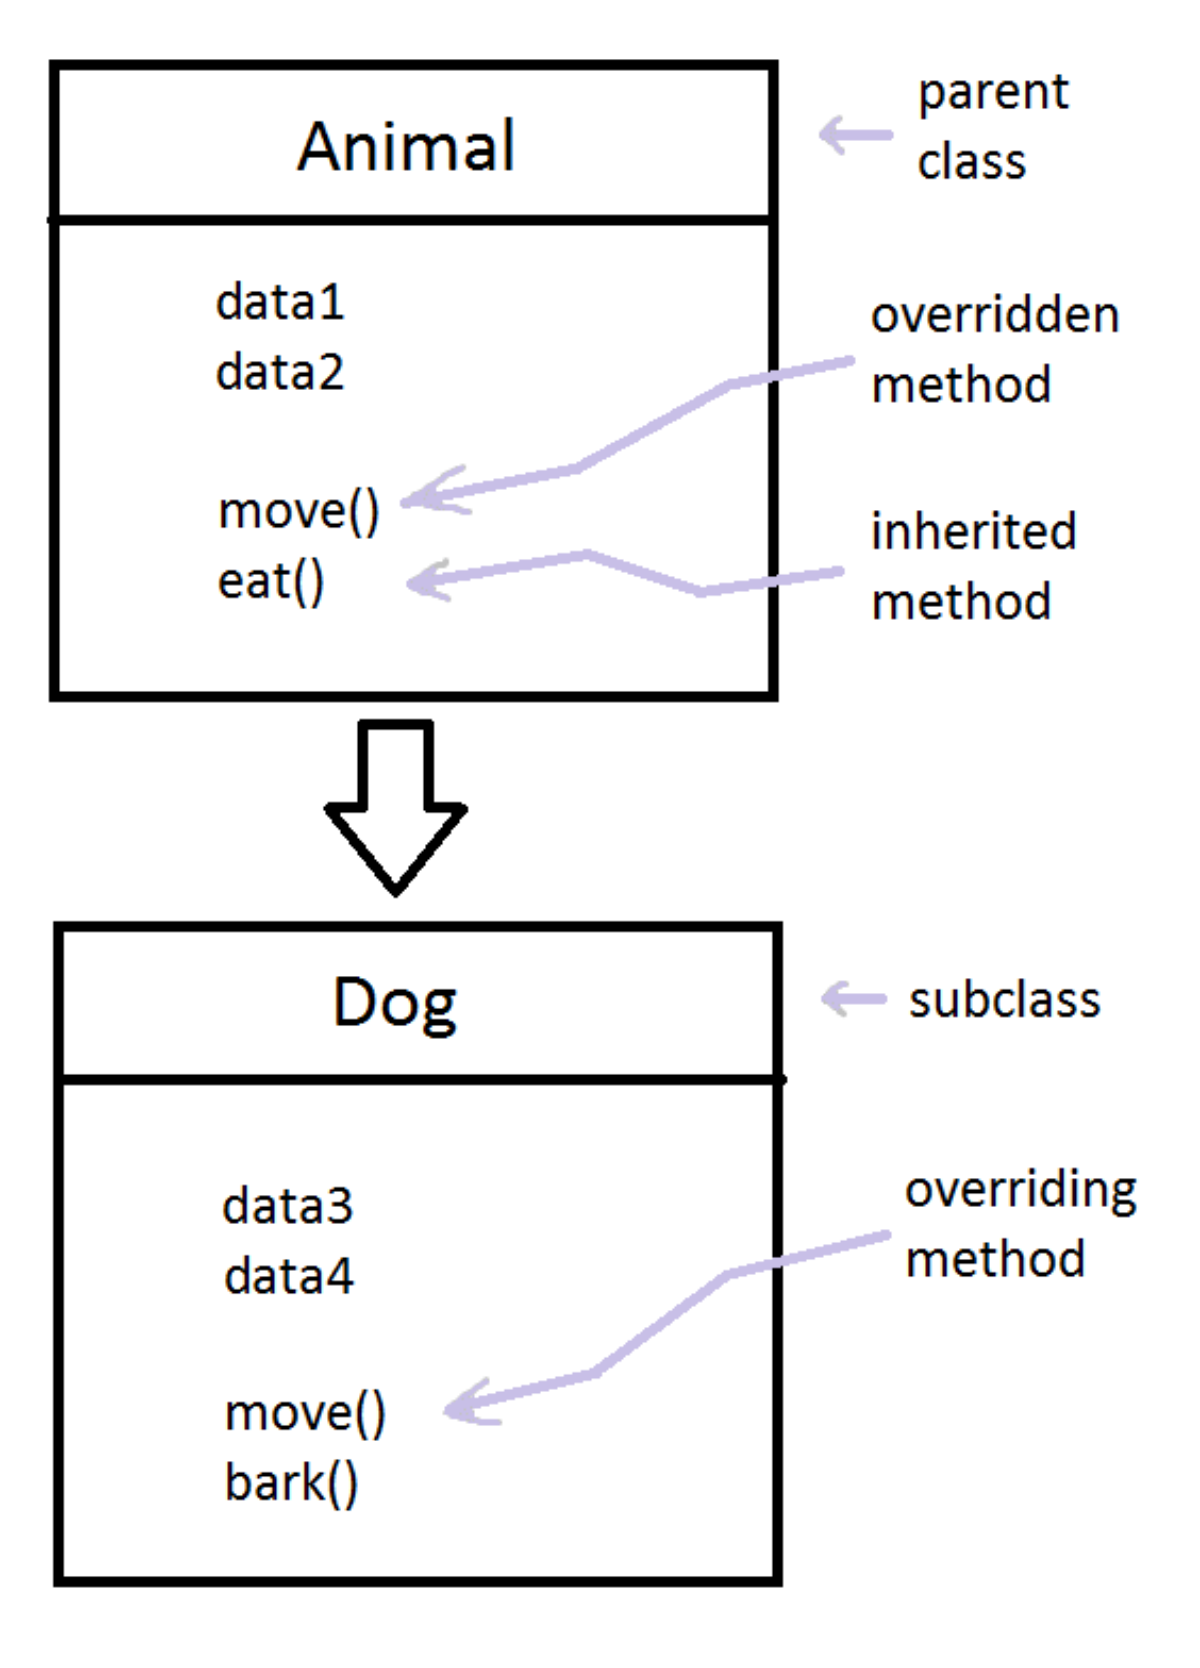 Method overriding - Wikipedia